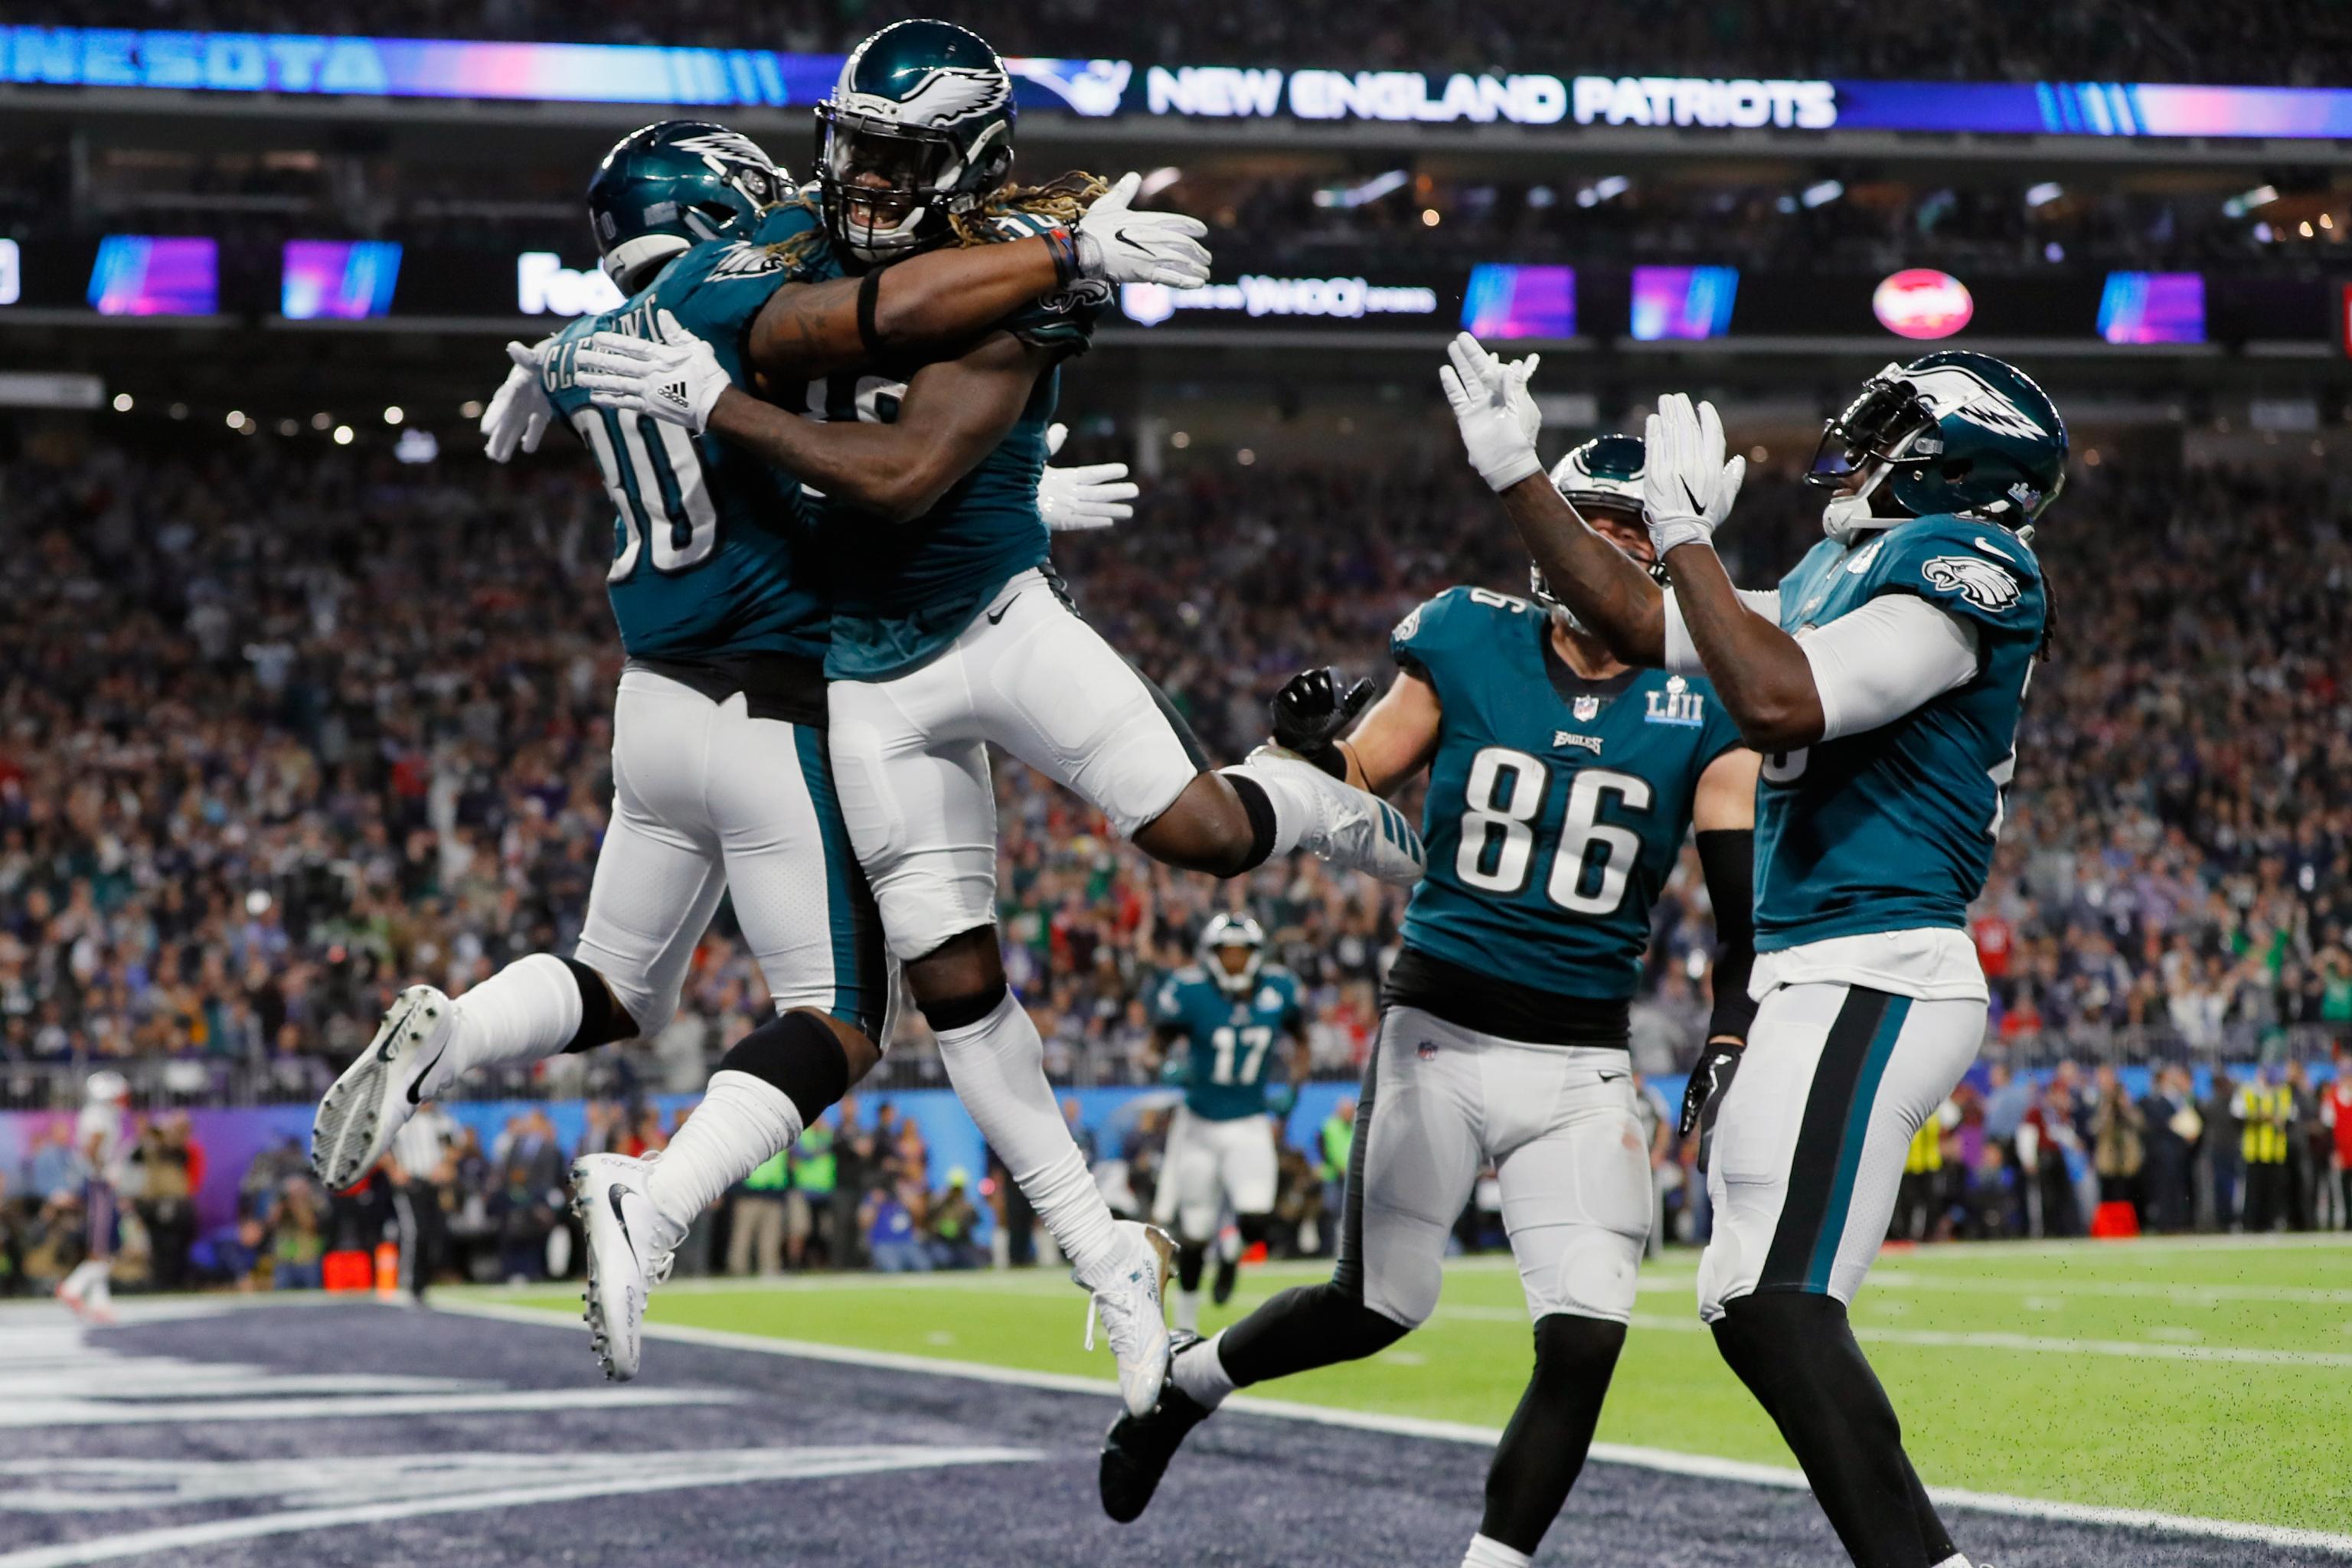 Super Bowl 2018 final score: Eagles win first Super Bowl title